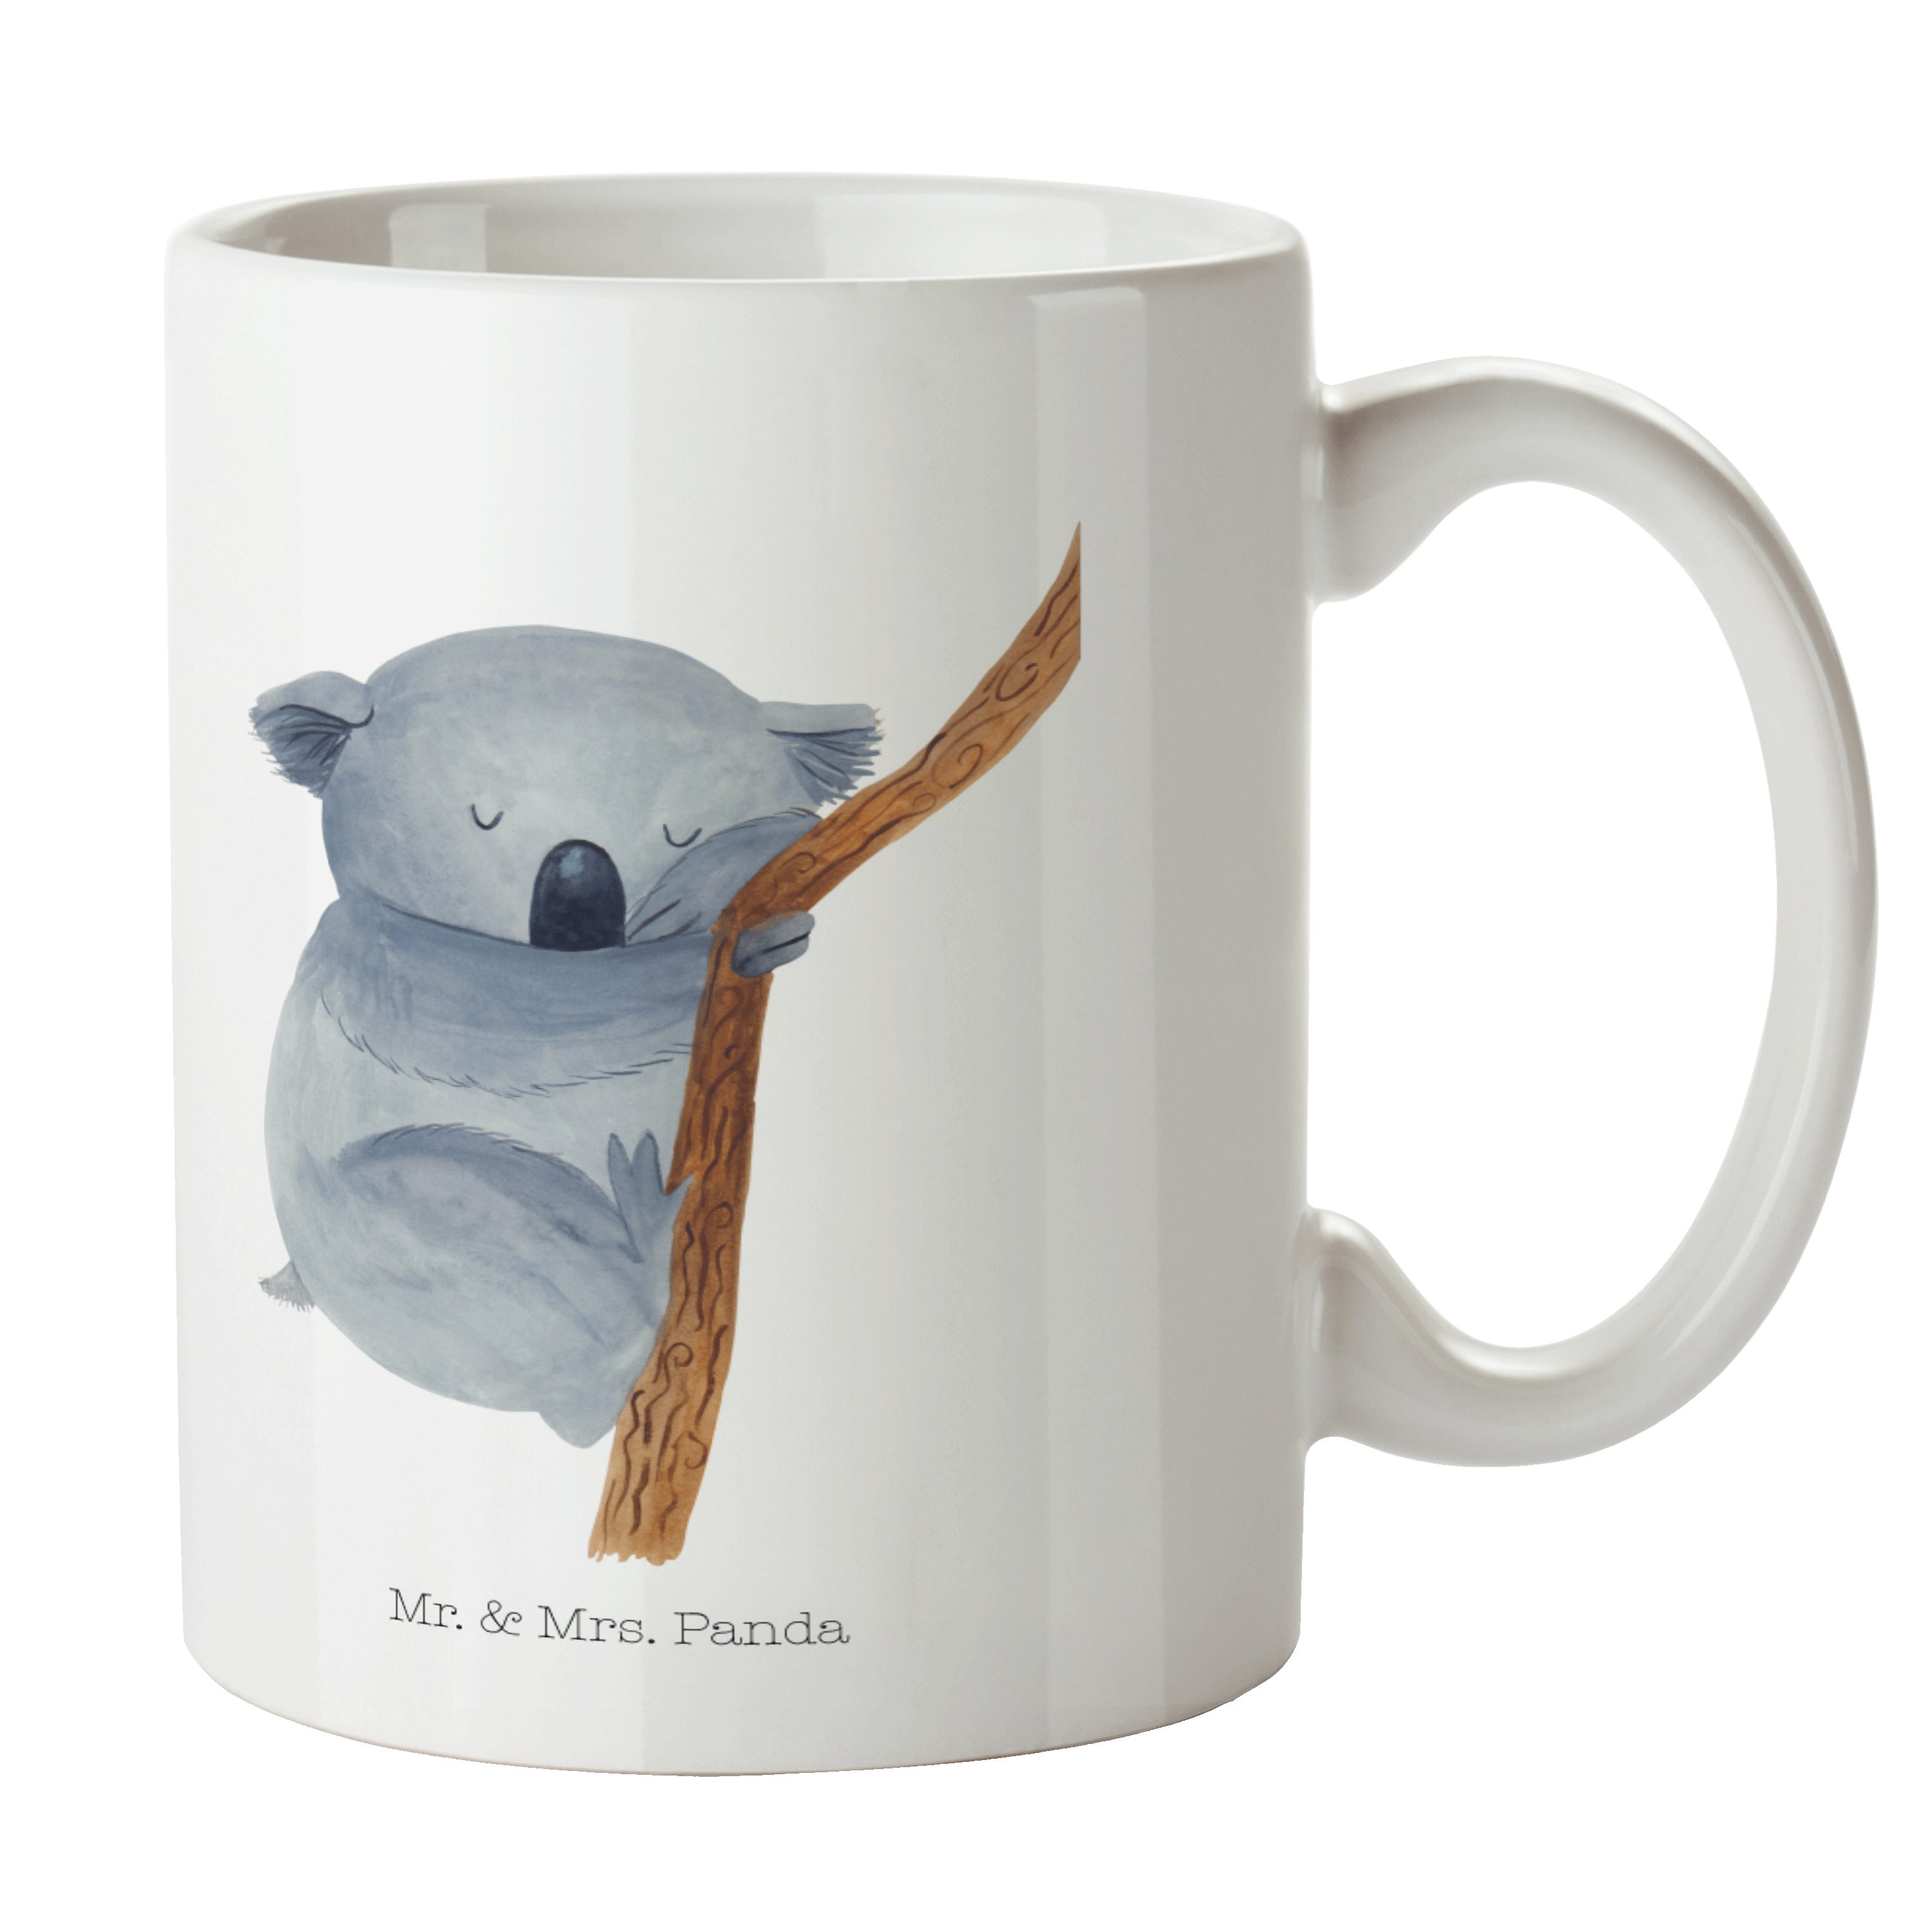 Mr. & Mrs. Panda Tasse Koalabär - Weiß - Geschenk, Tiere, Tasse Motive, Gute Laune, Kaffeeta, Keramik